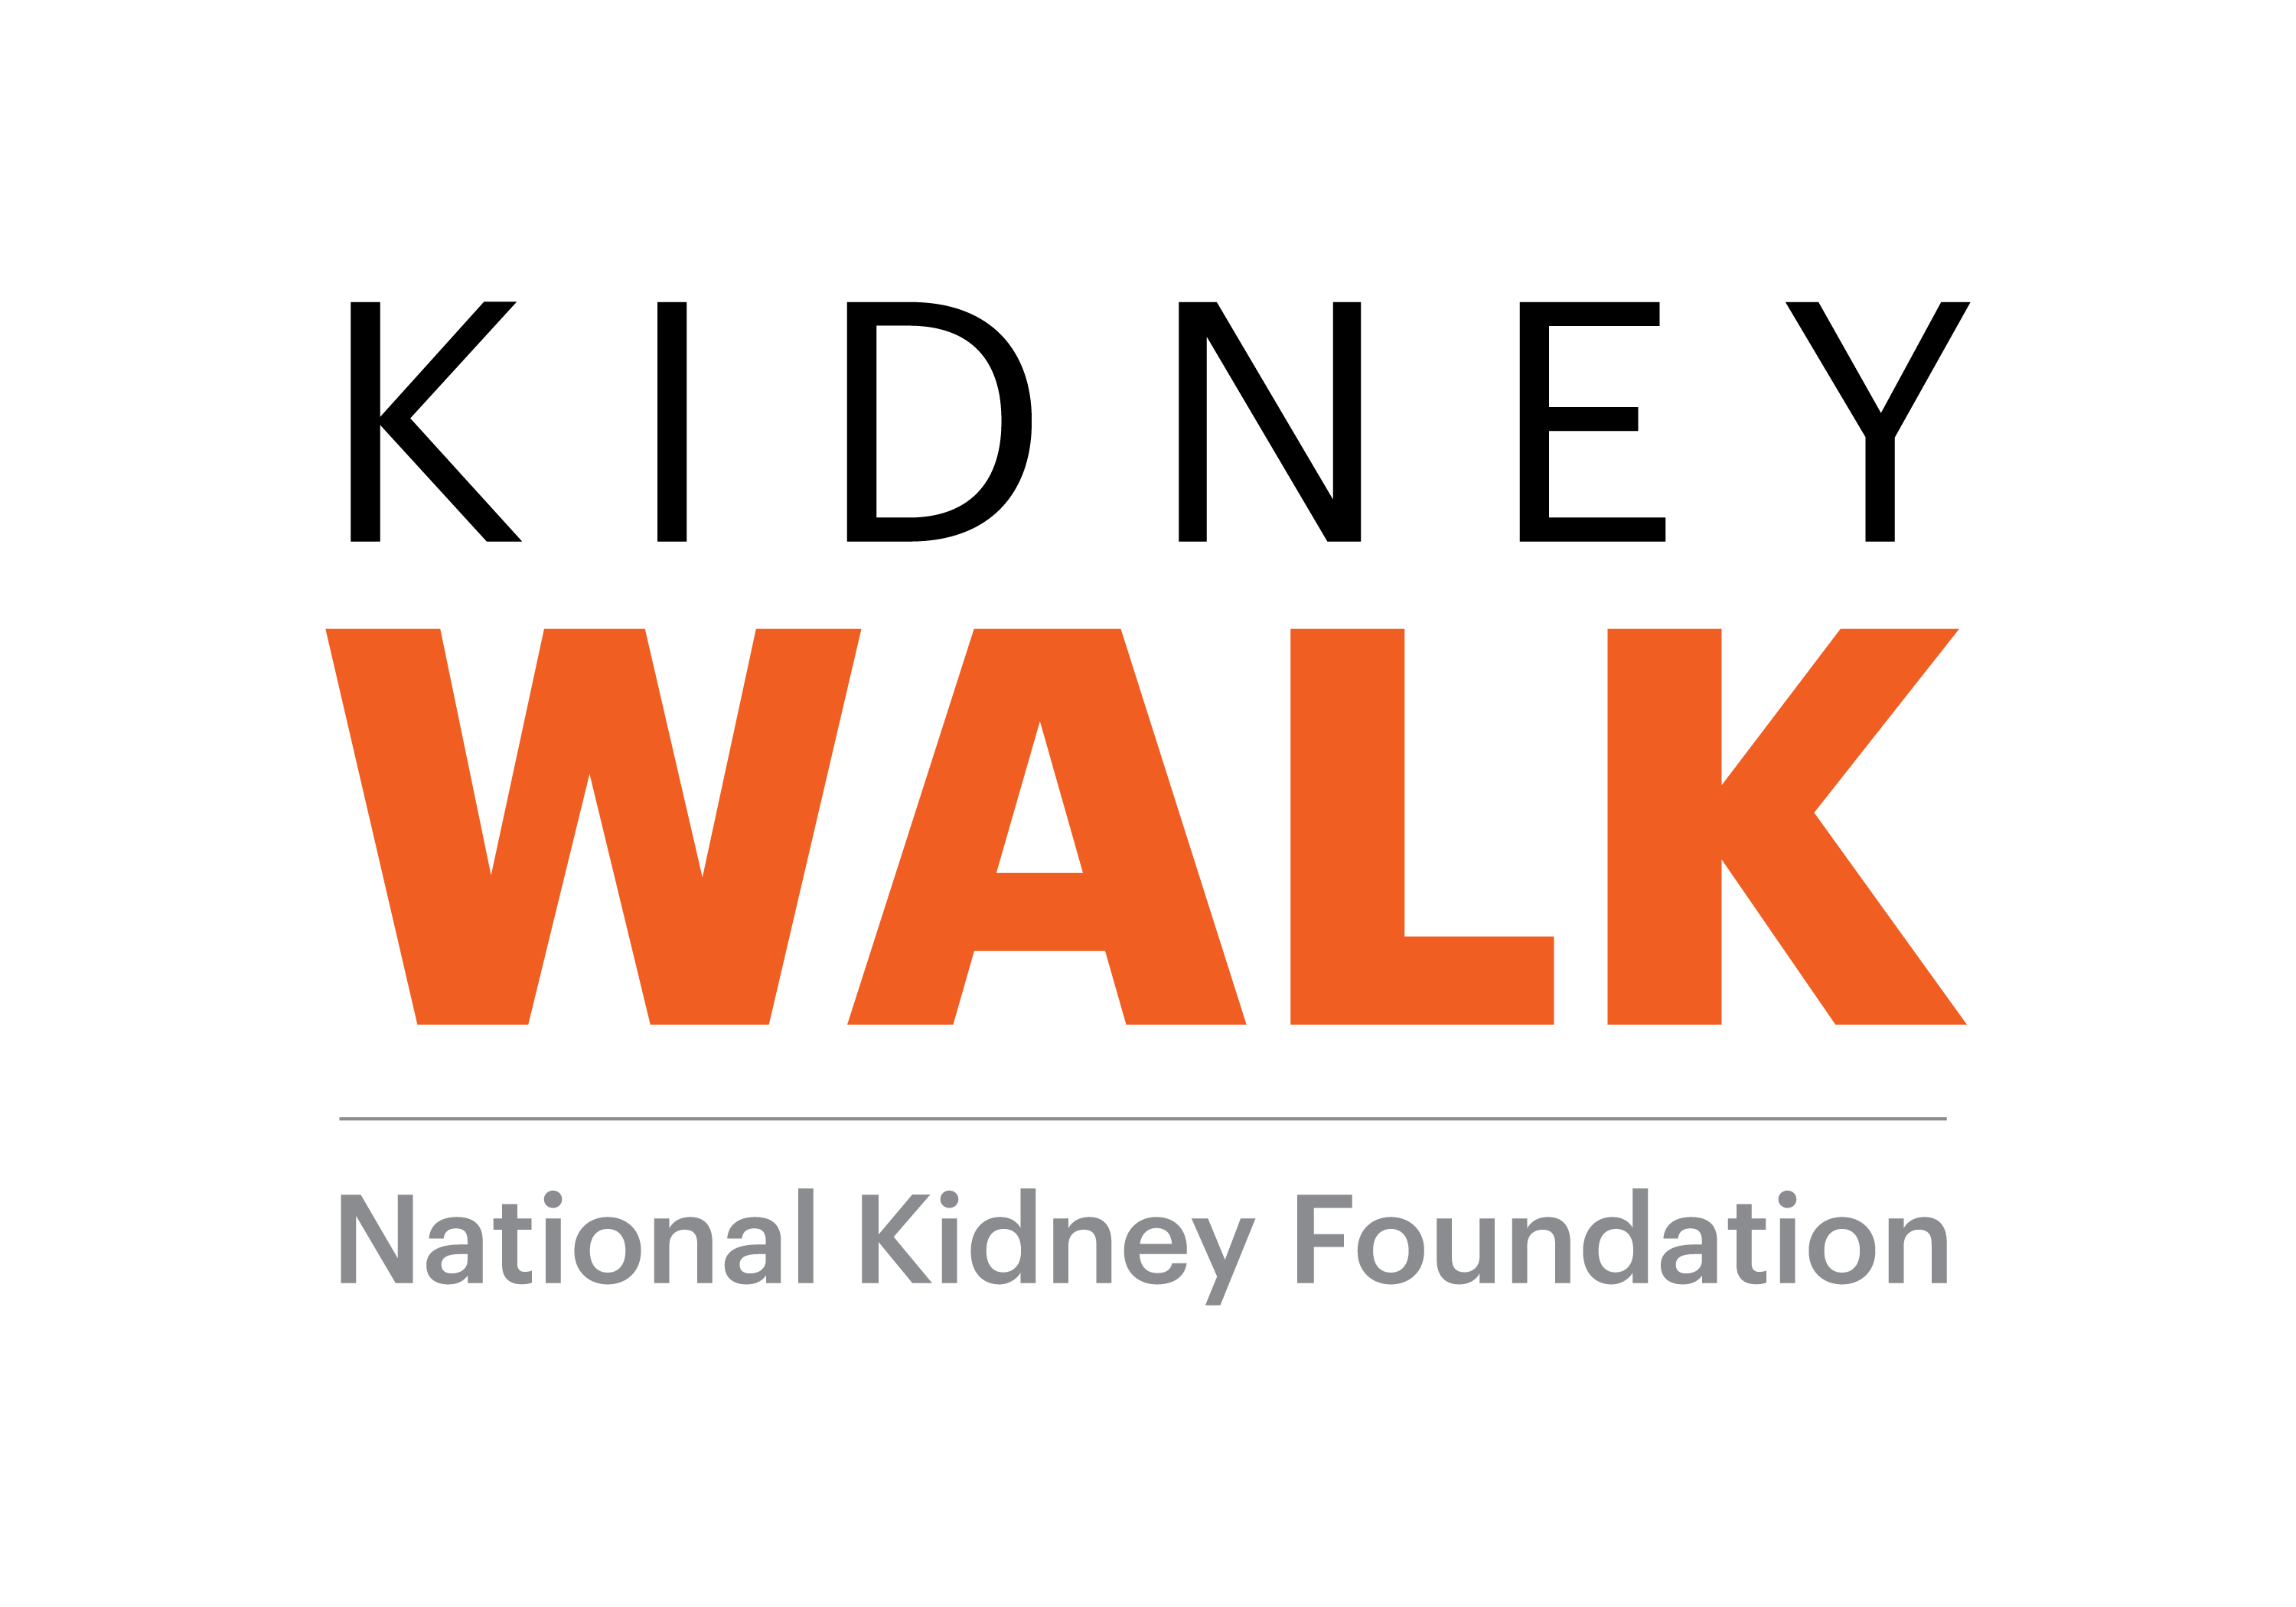 Walk the Kidney Walk!